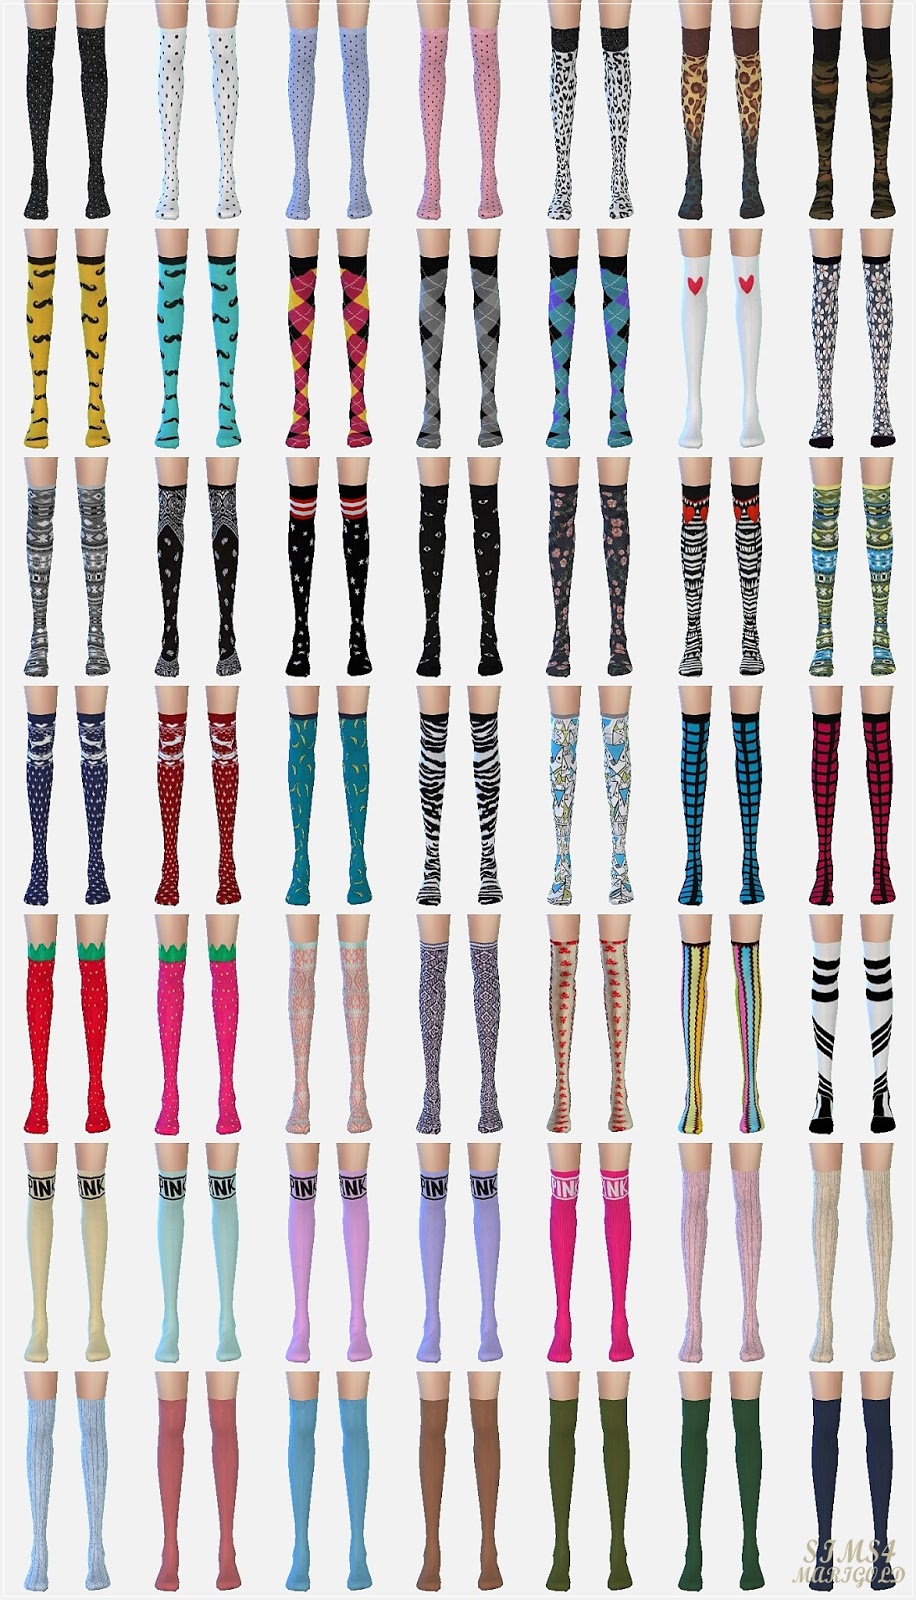 Collection Of Sims 4 Cc Knee High Socks Nekros Cotton High Socks Over